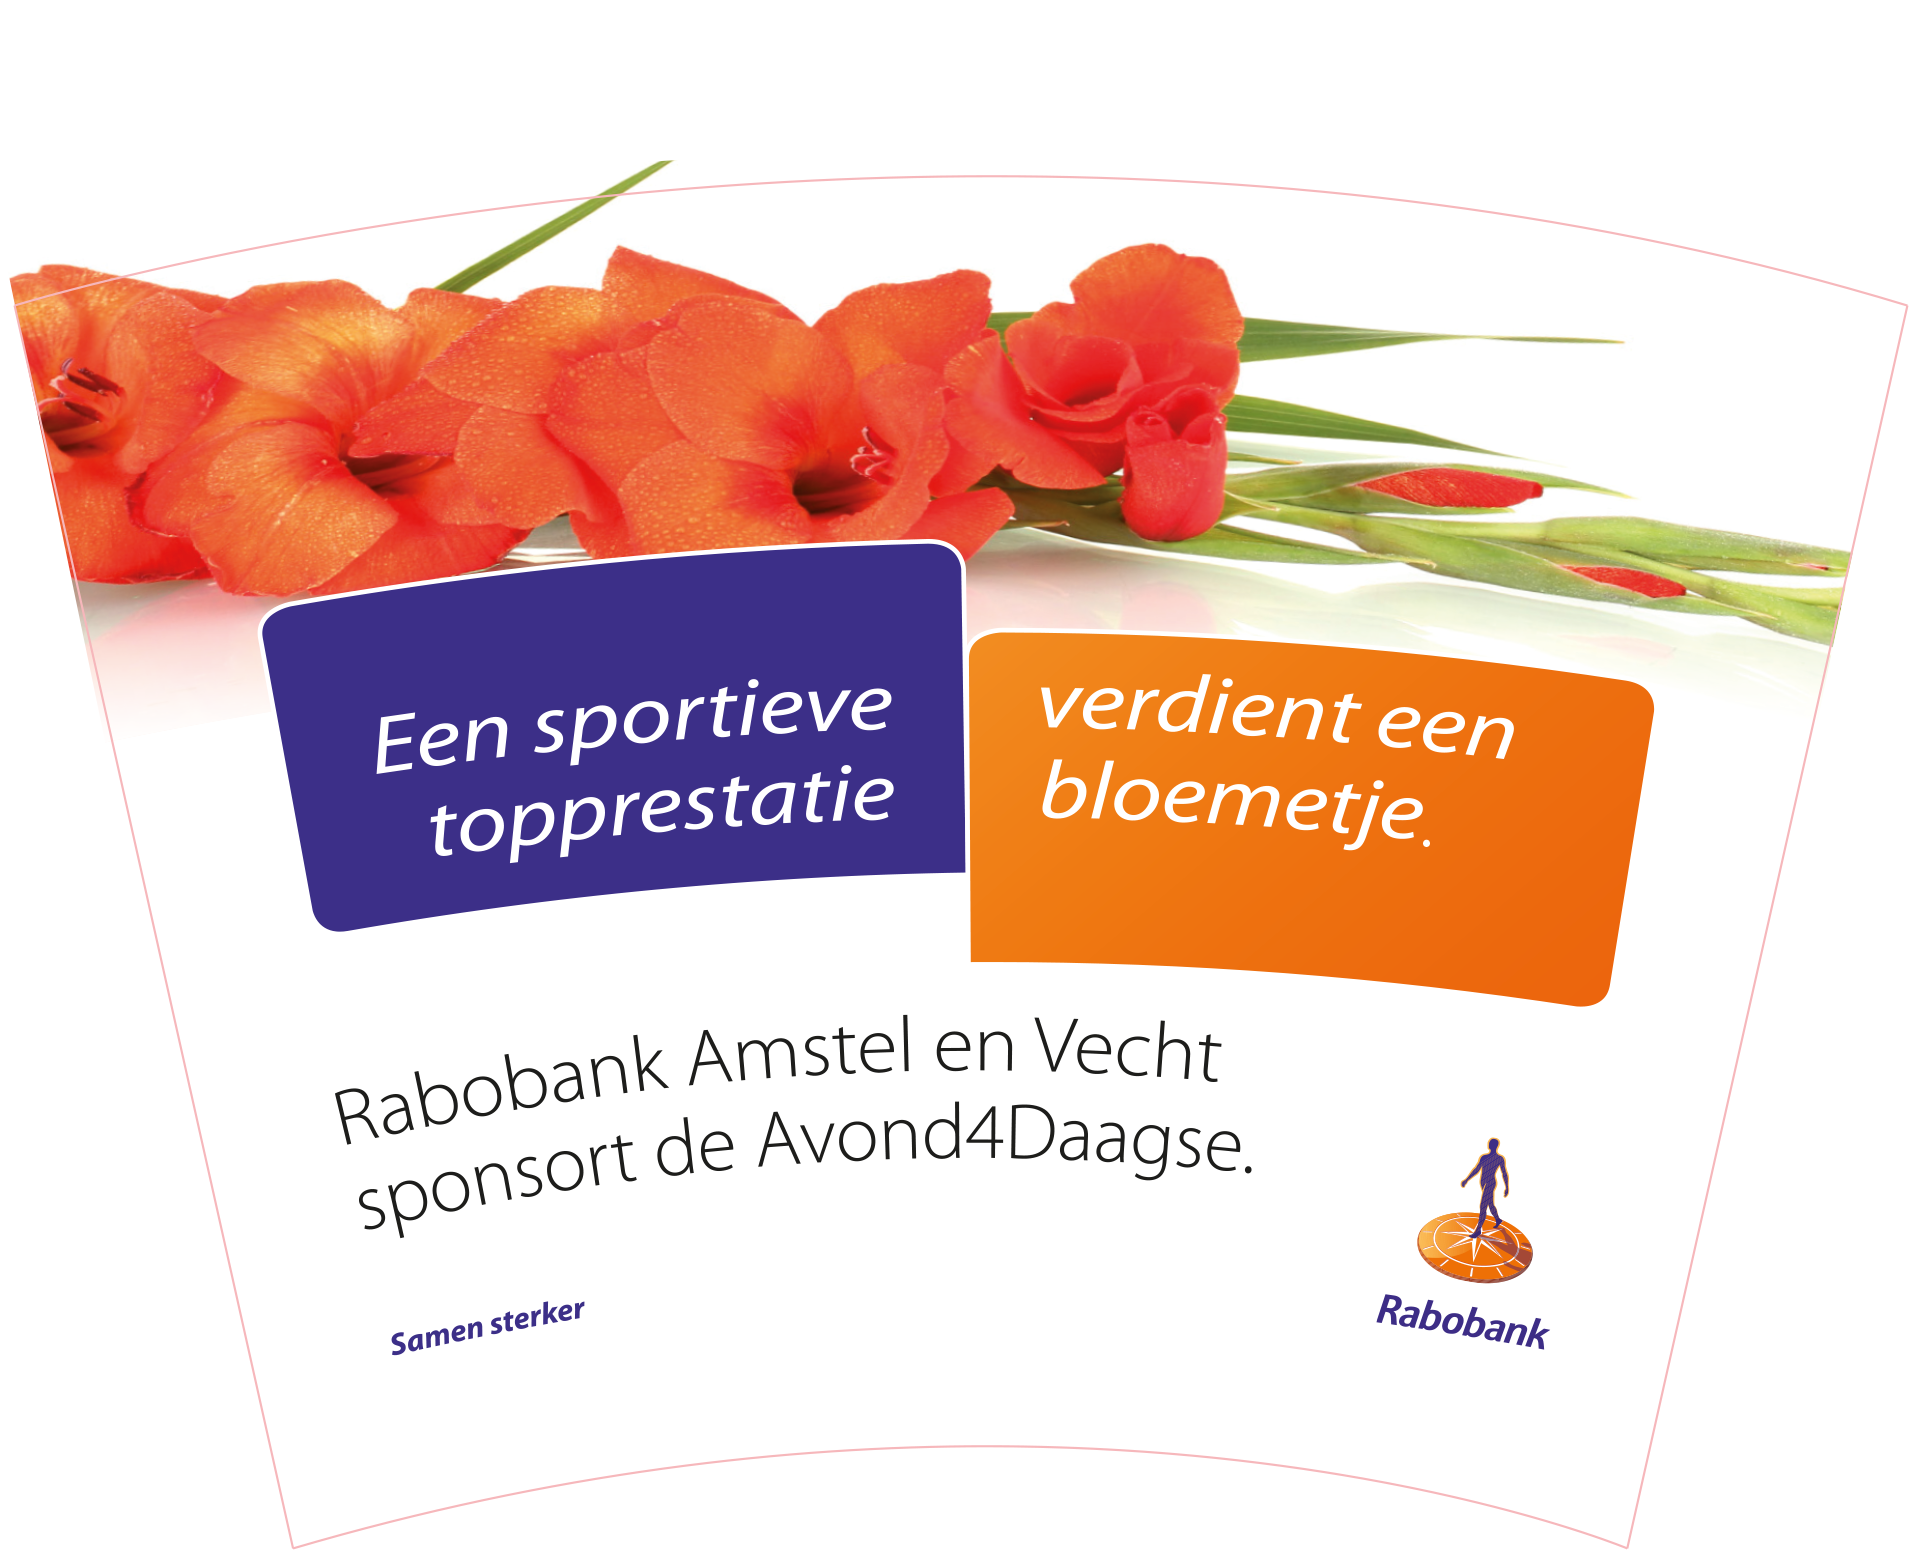 Rabobank Amstel Vecht